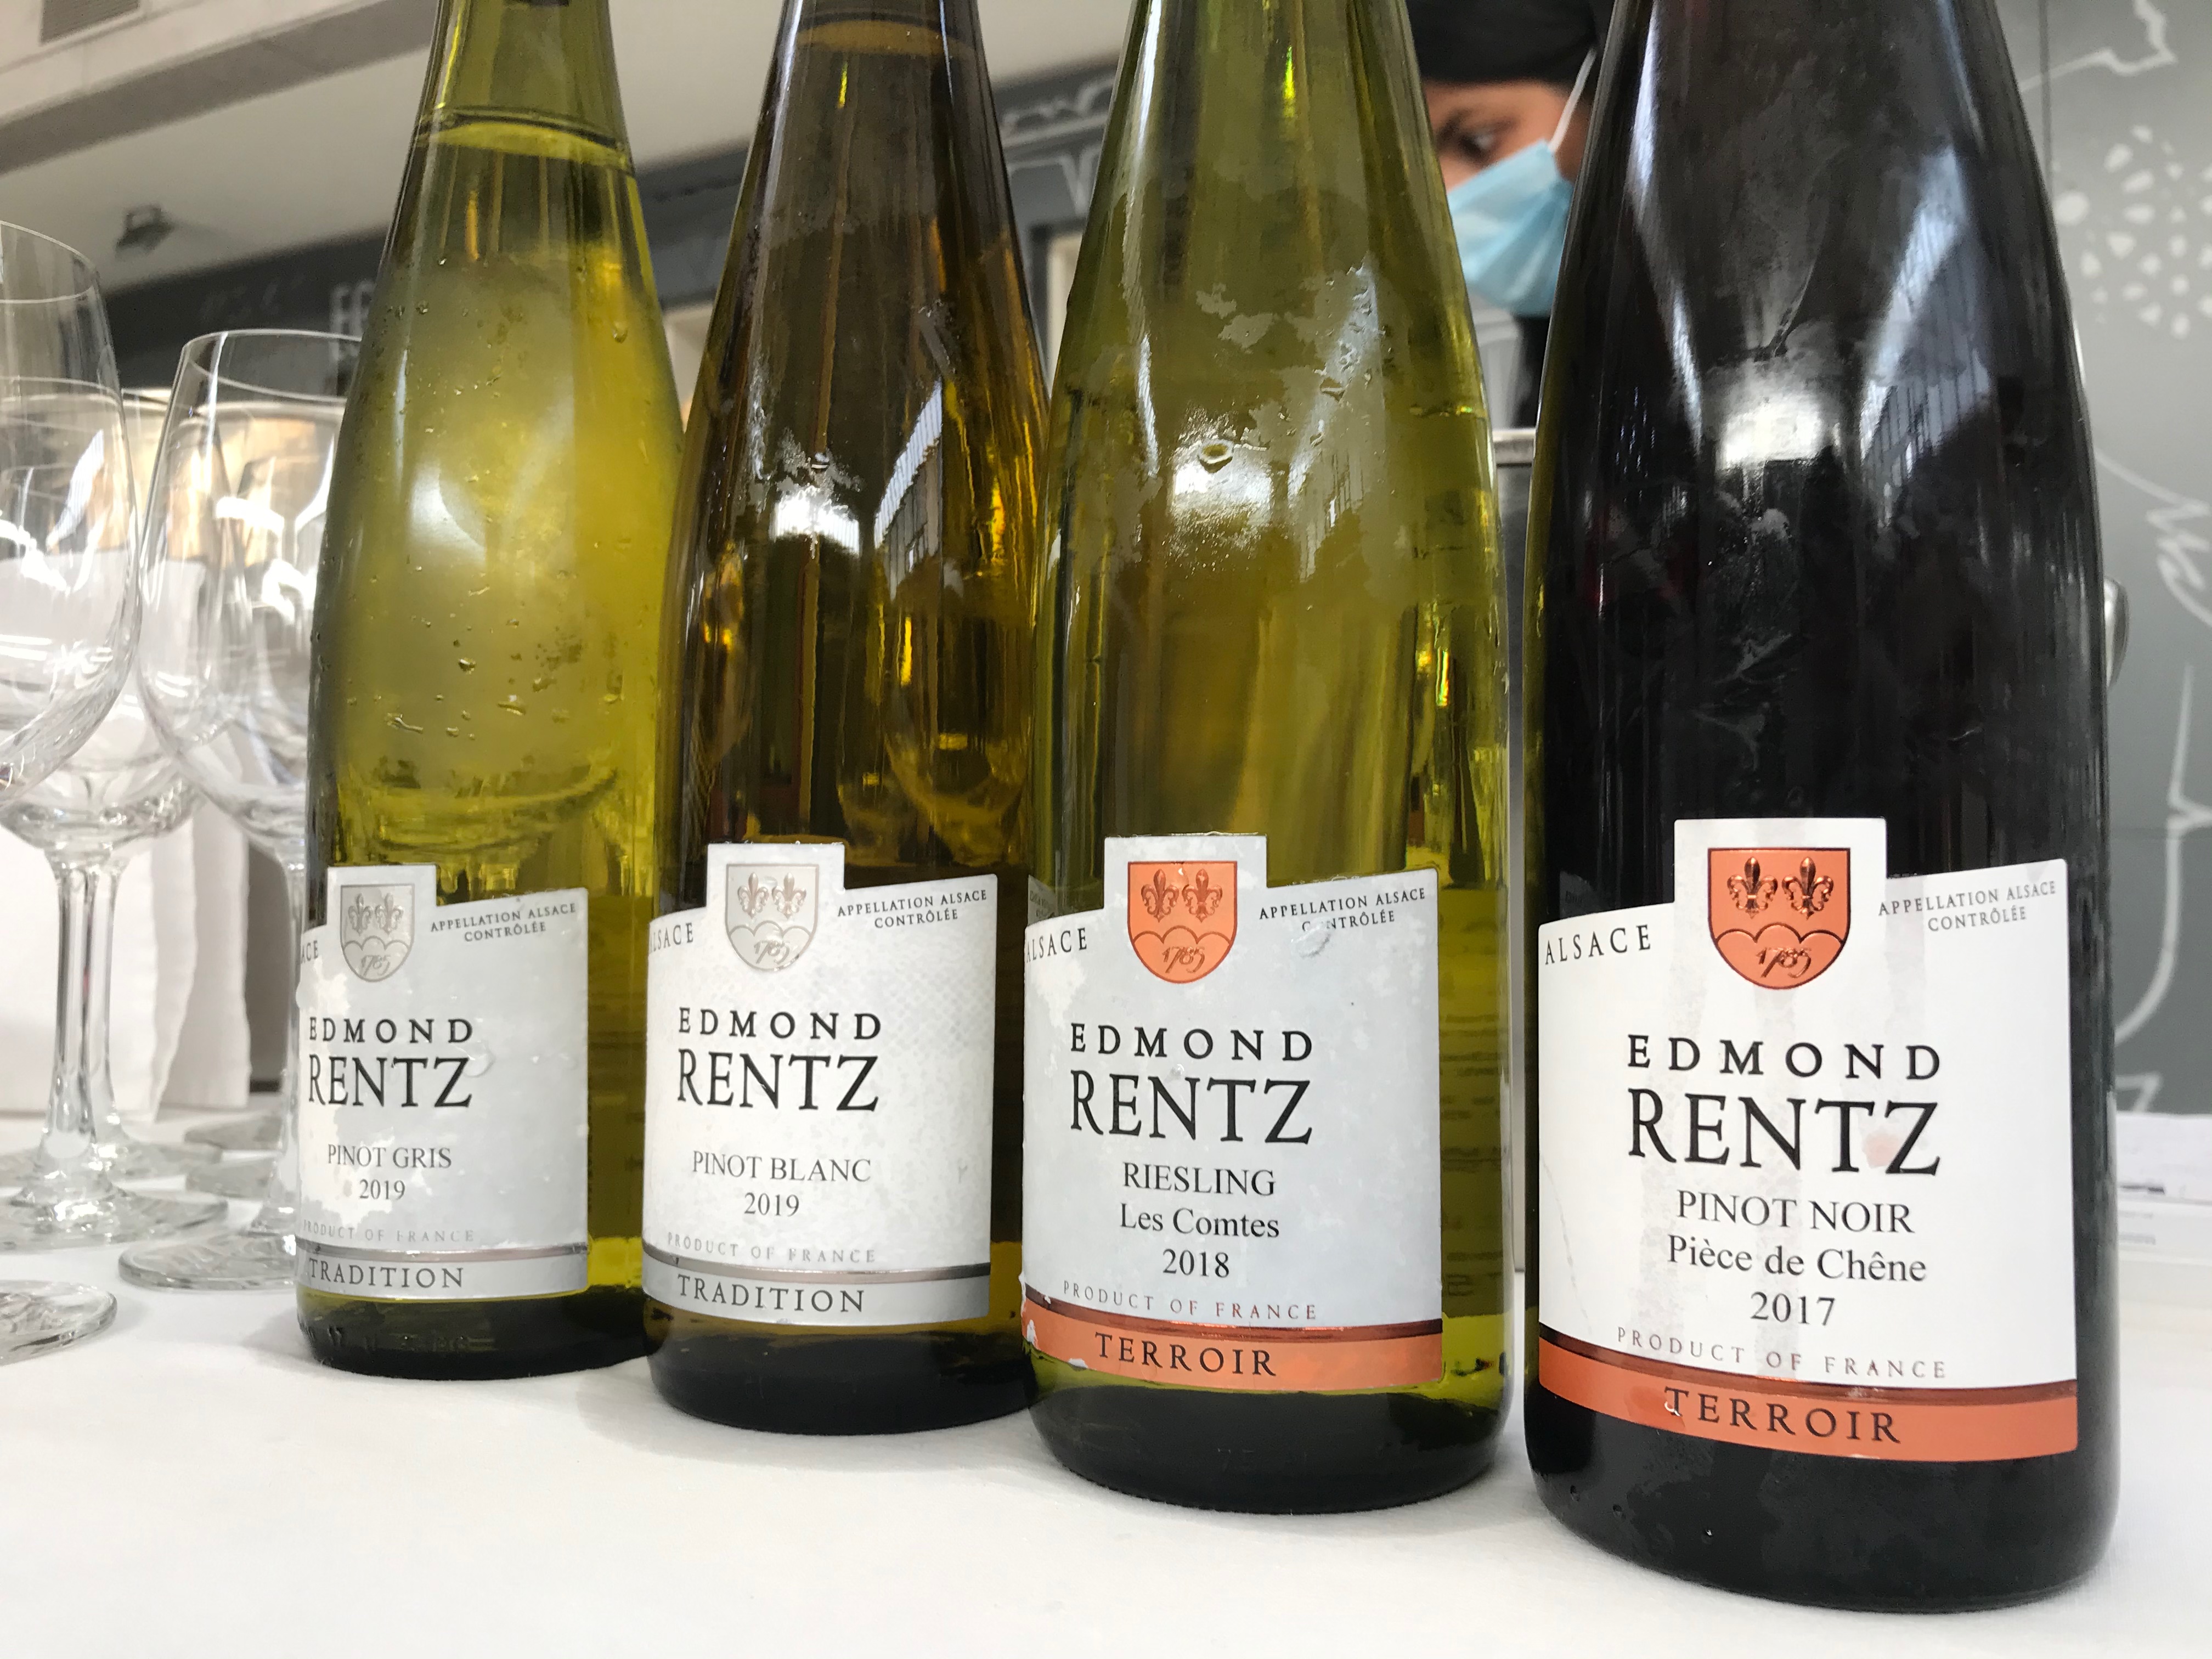 Edmond-rentz-wines